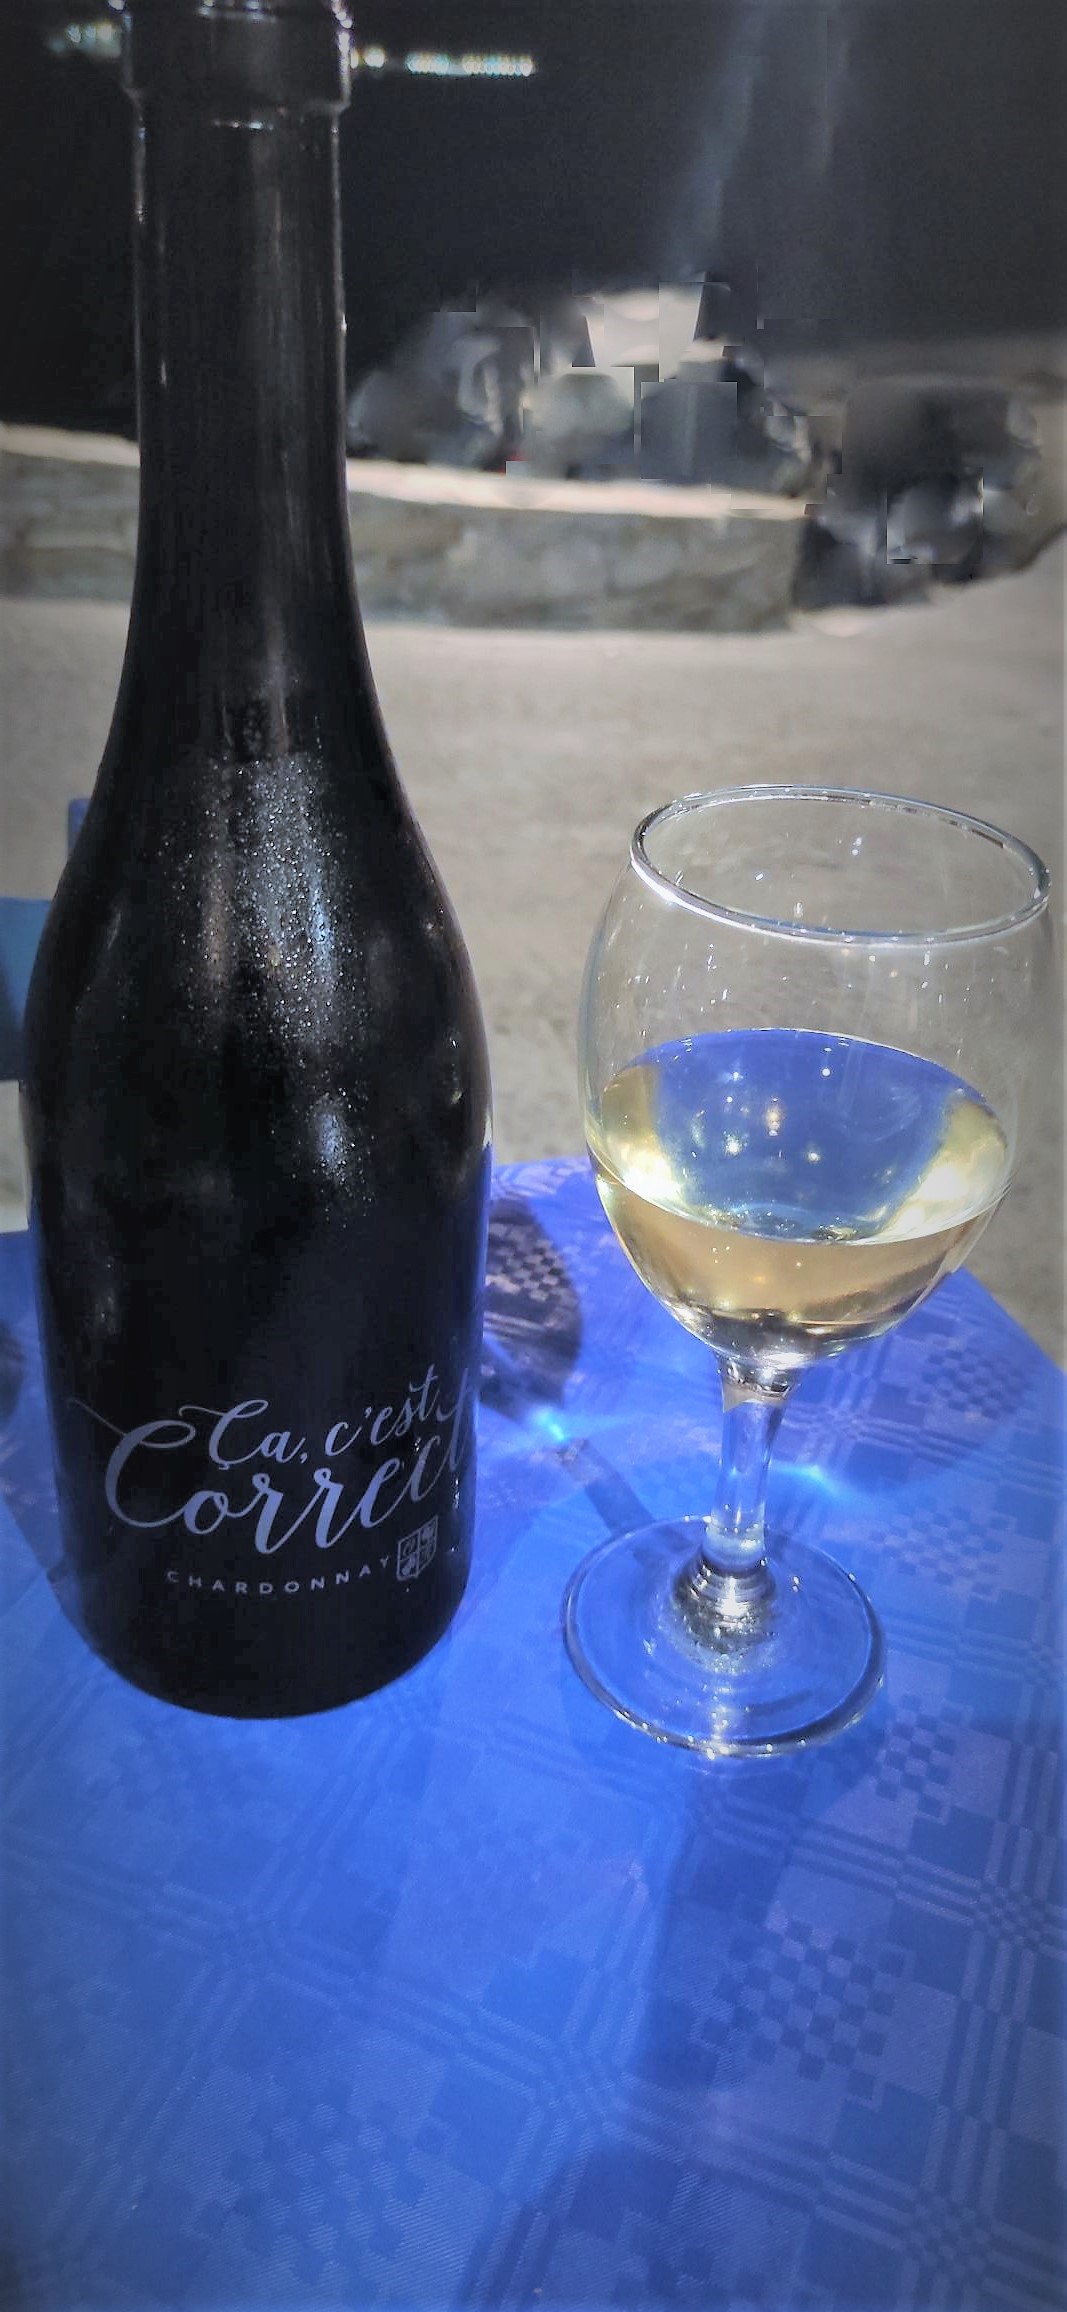 Ca c’est Correct Chardonnay 2019 – Κτήμα Παπαργυρίου